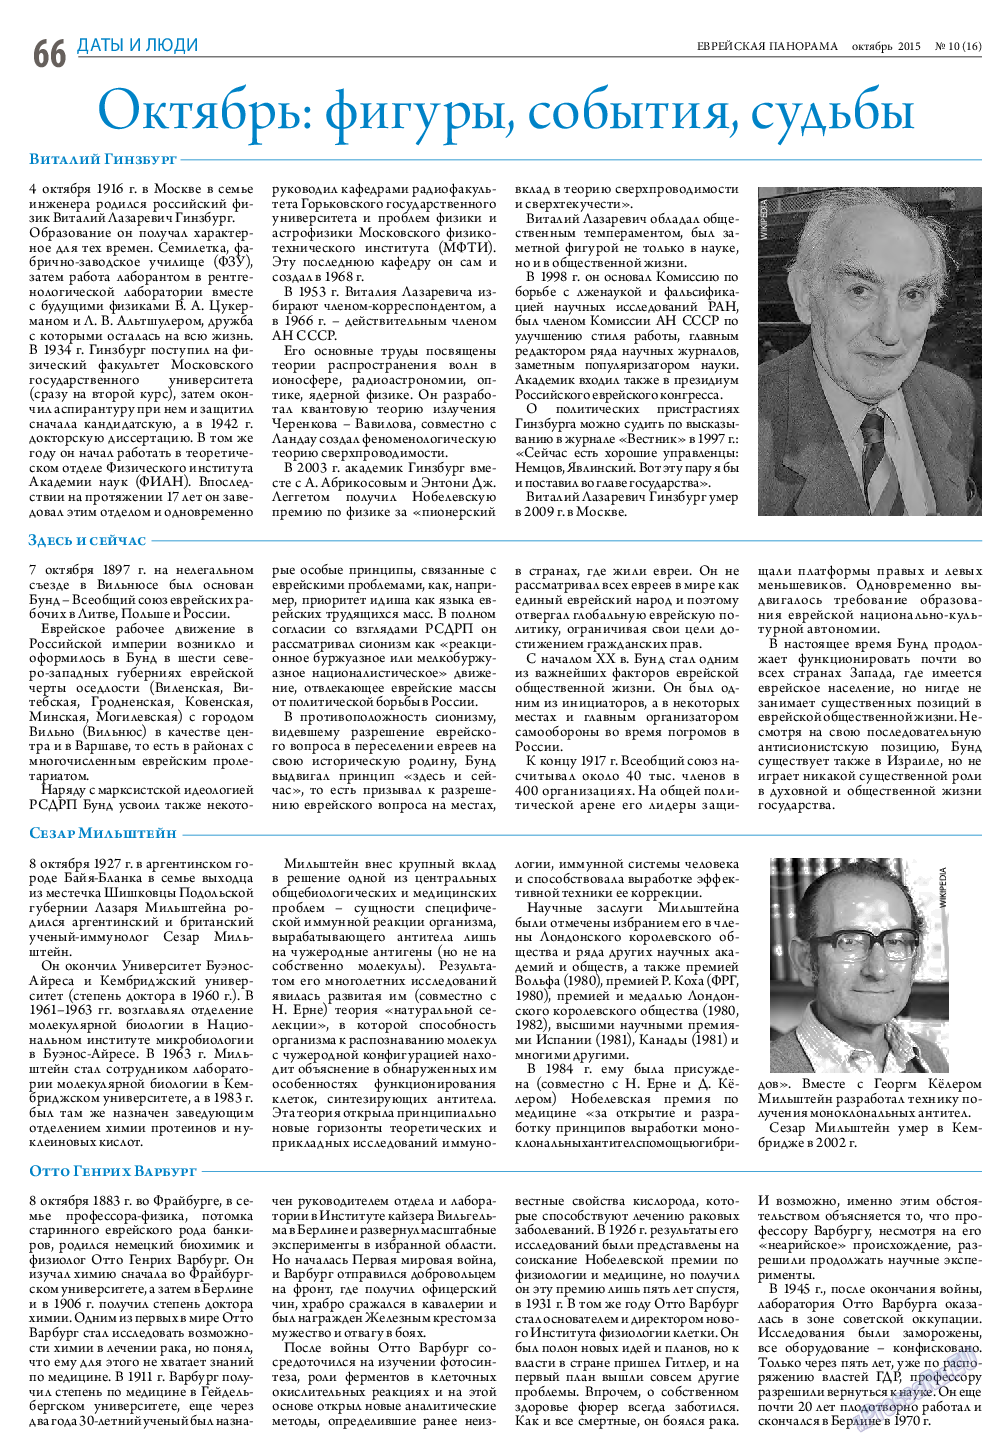 Еврейская панорама, газета. 2015 №10 стр.66